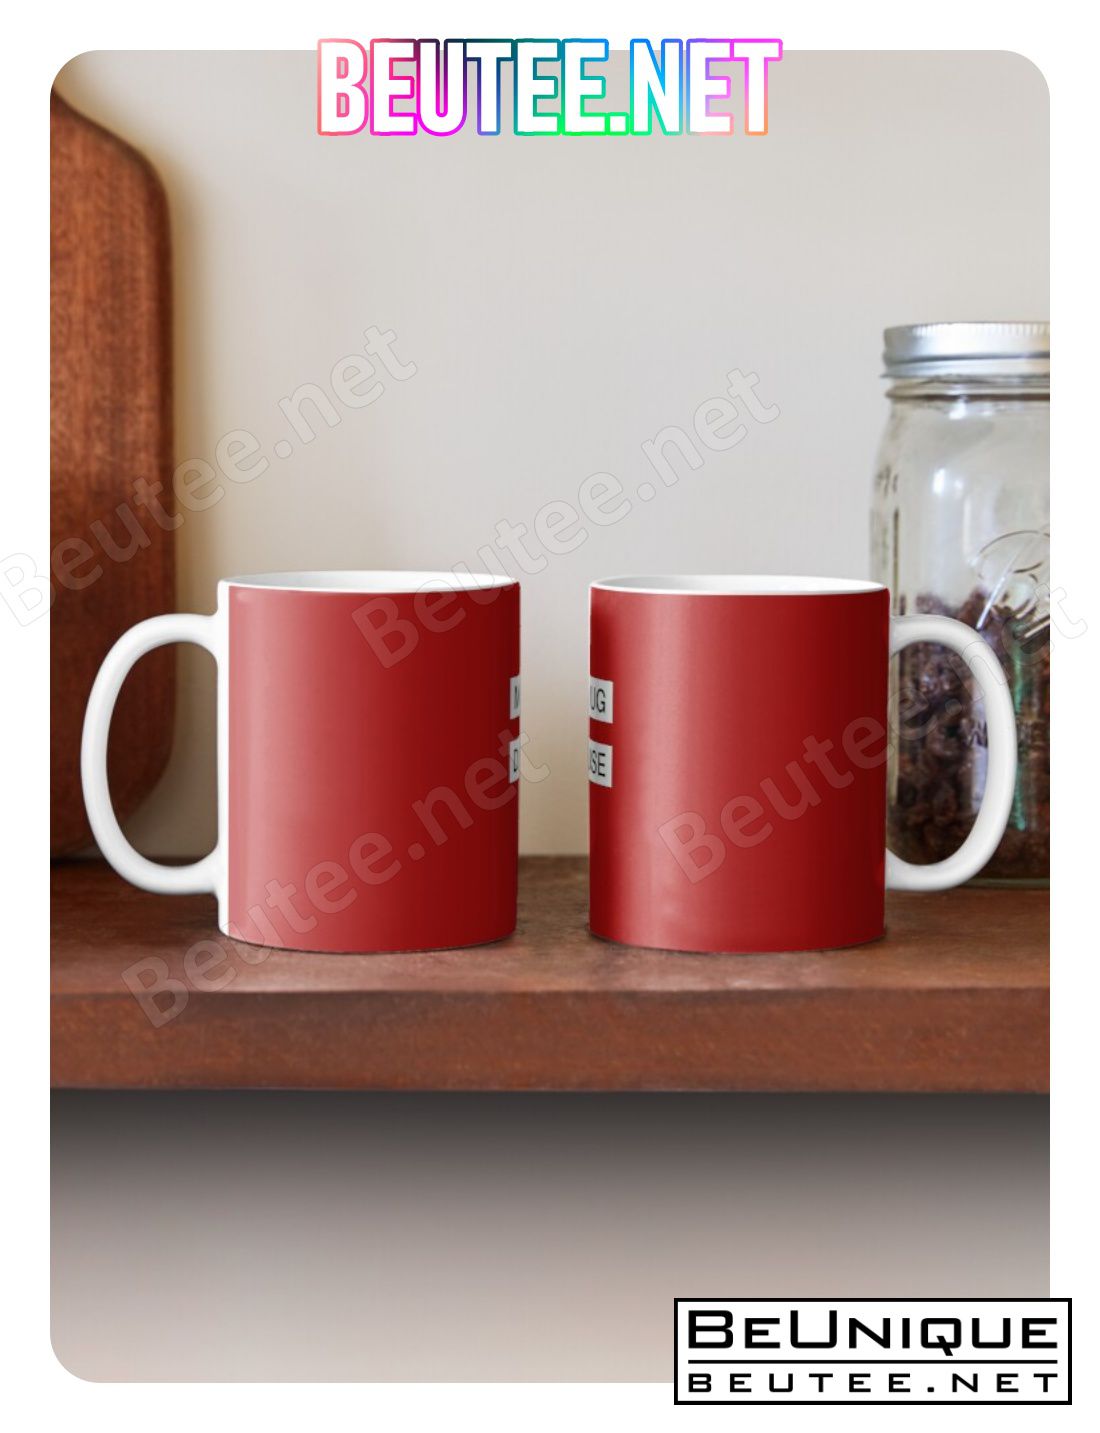 Mr G's Mug - Do Not Use Coffee Mug